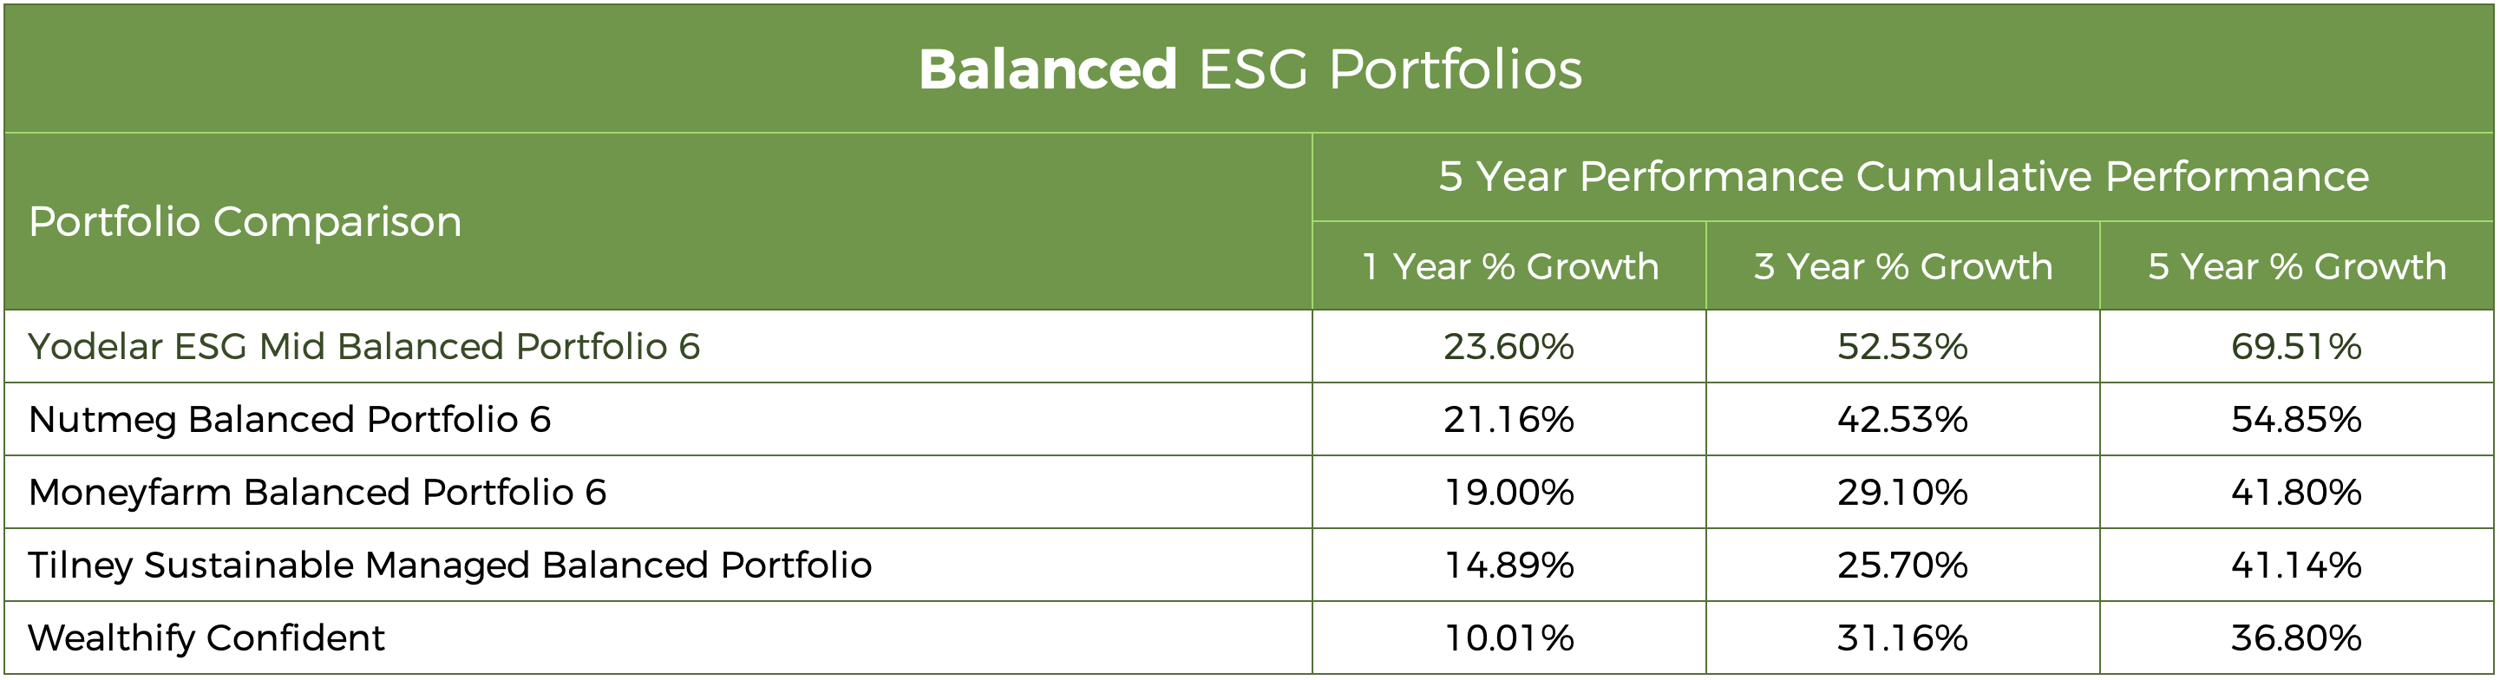 Balanced - ESG Portfolio Comparison